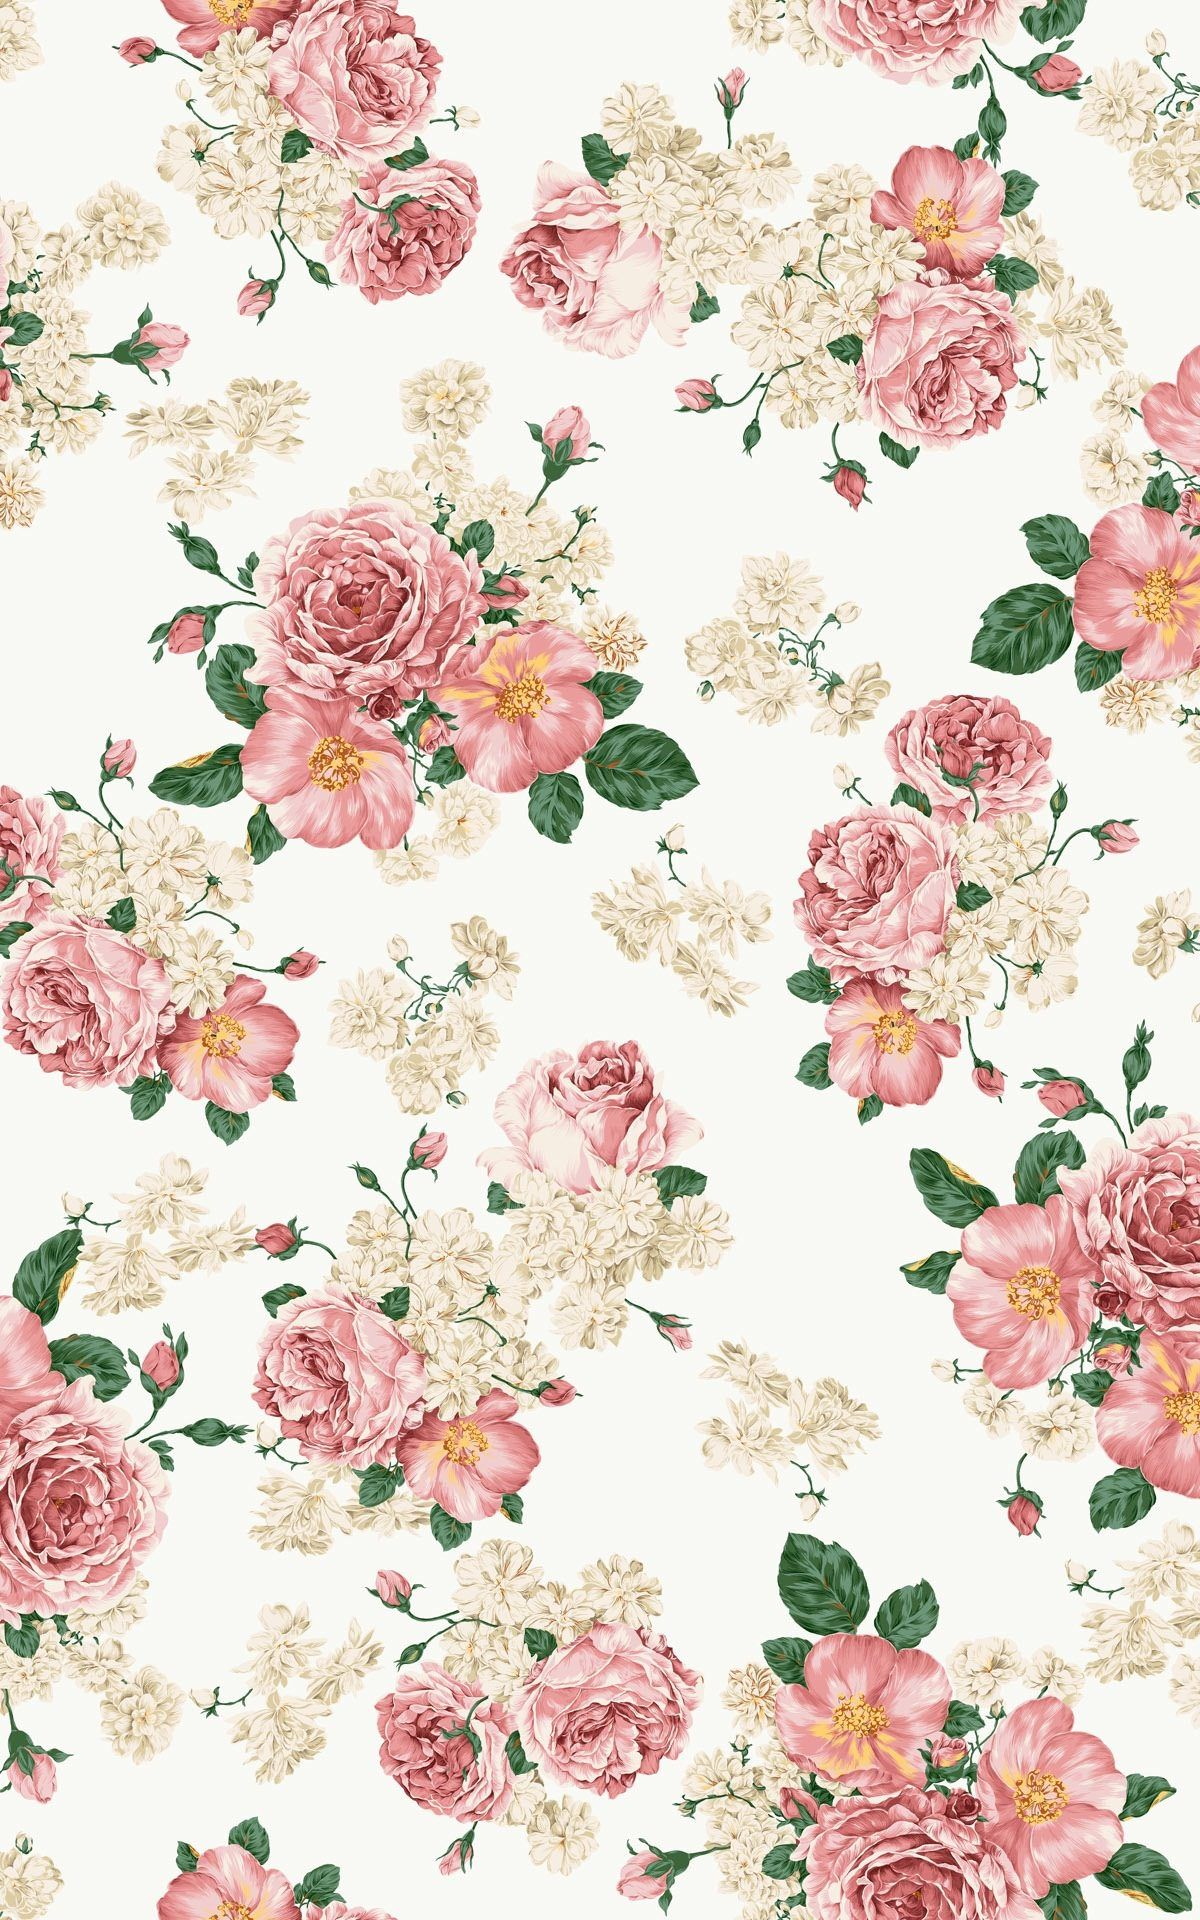 1200x1920 High Res Vintage Pink Flower Wallpaper | Floral wallpaper iphone, Vintage flowers wallpaper, Pink flowers wallpaper